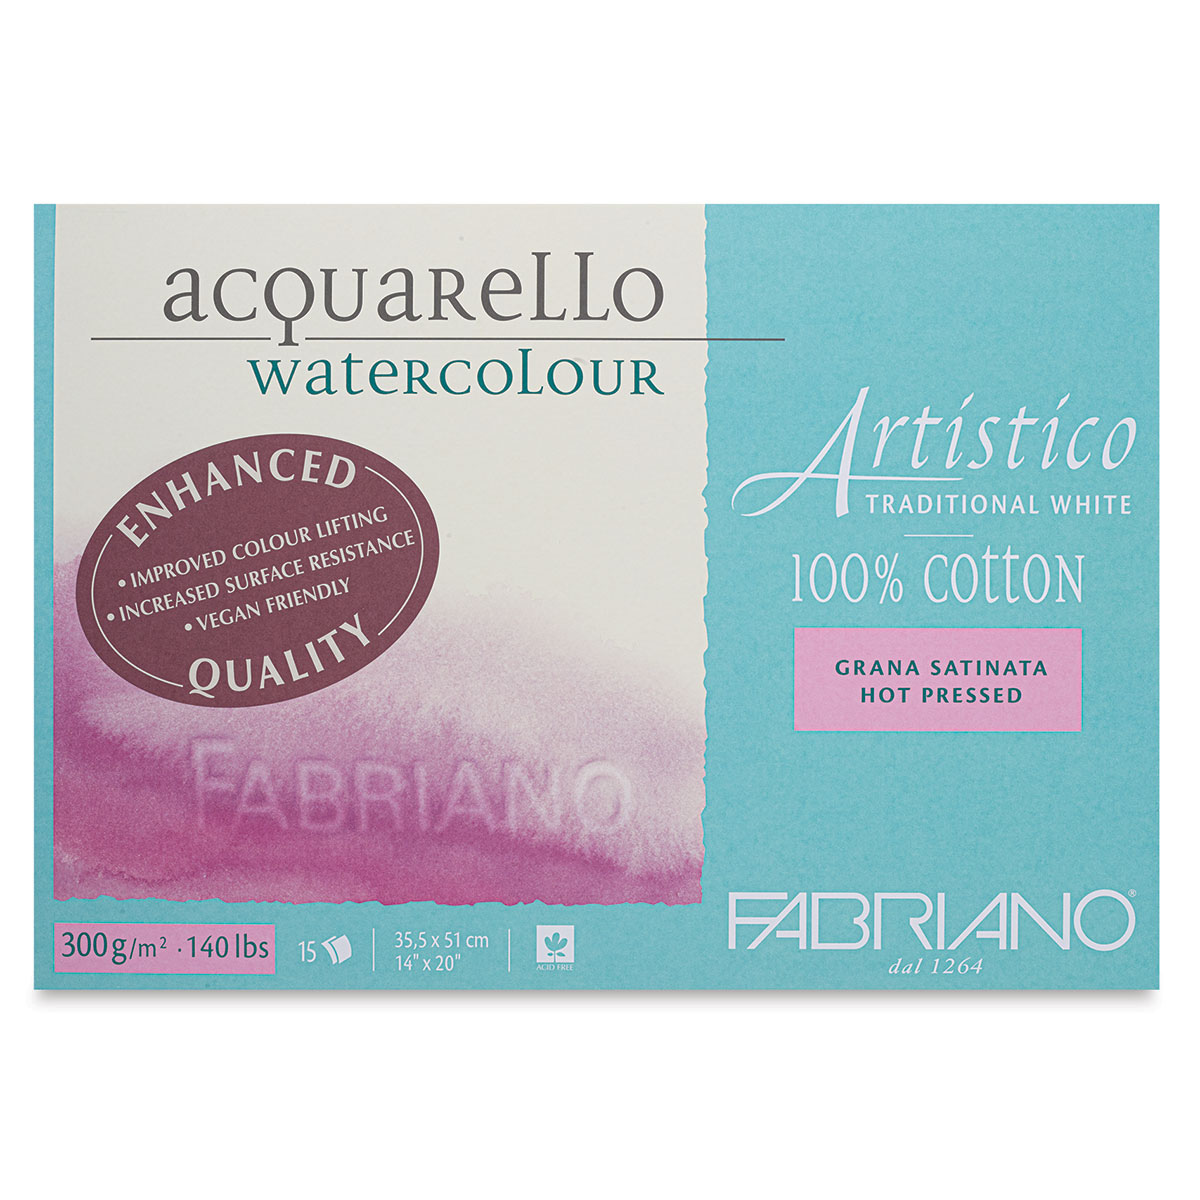 Fabriano Artistico Enhanced Watercolor Block - Traditional White, Hot Press, 5 x 7